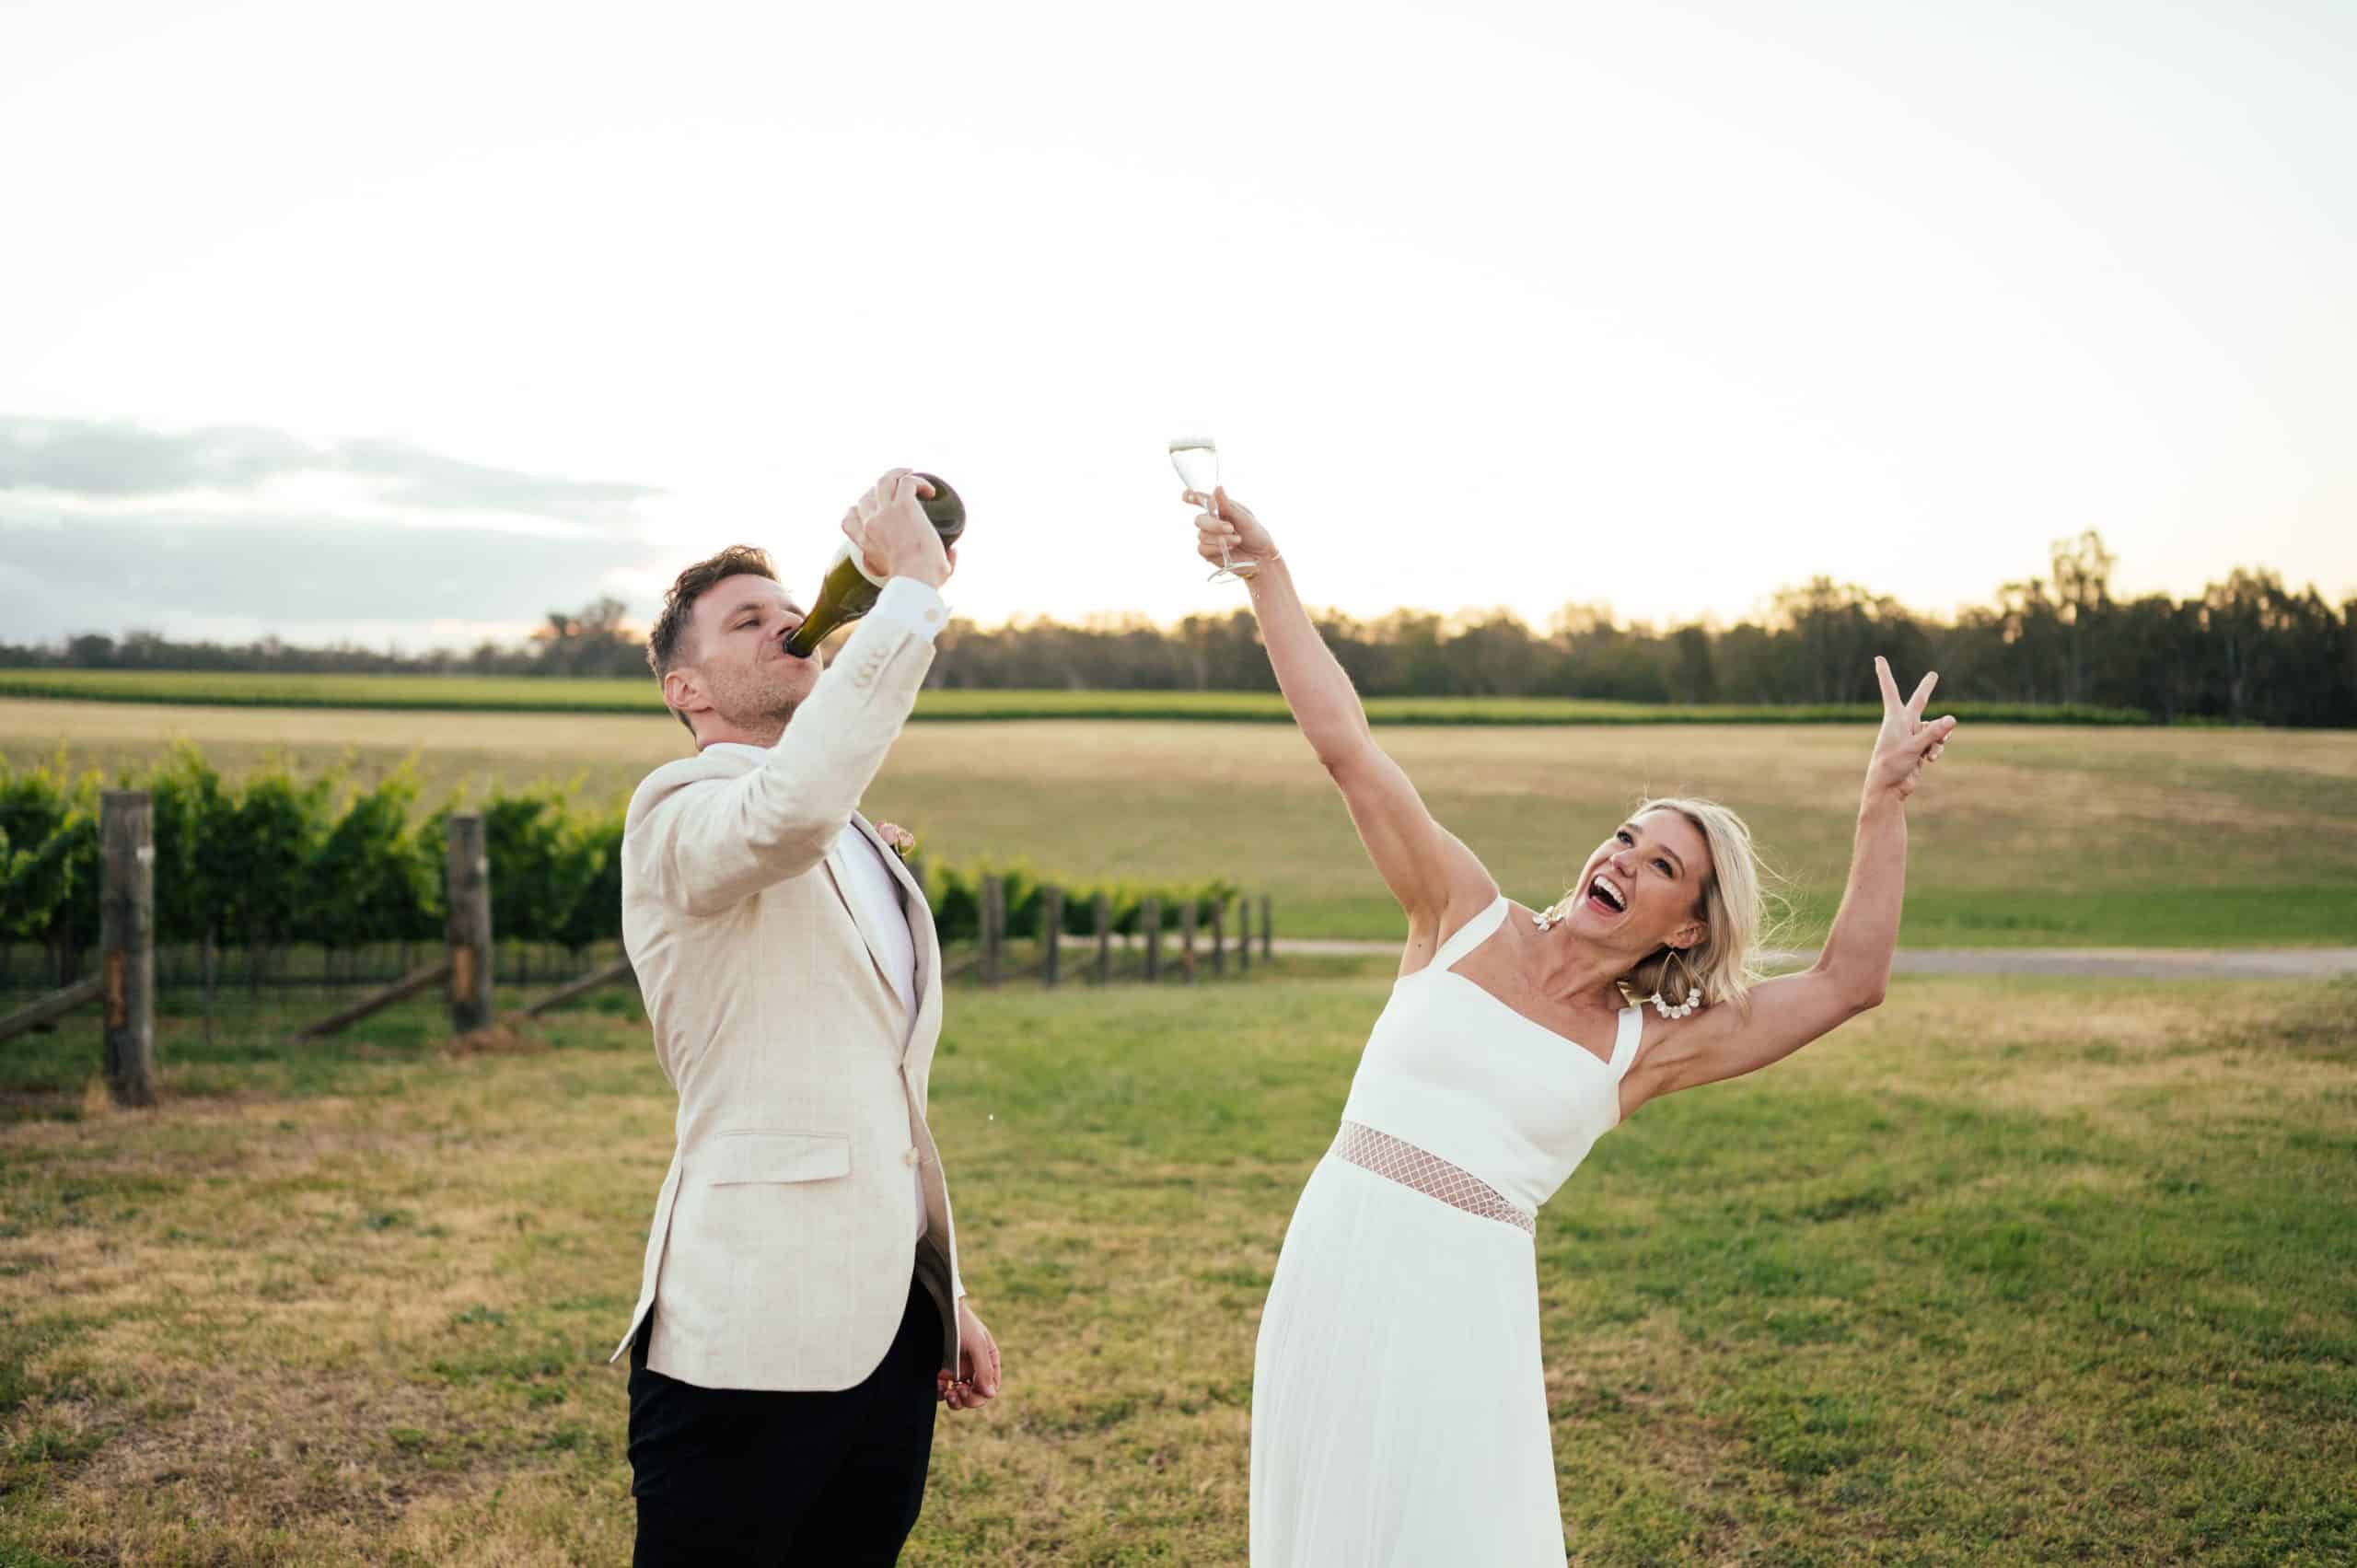 Alex Motta Wedding Photographer Newlyweds with Champagne Bottle at Sunset